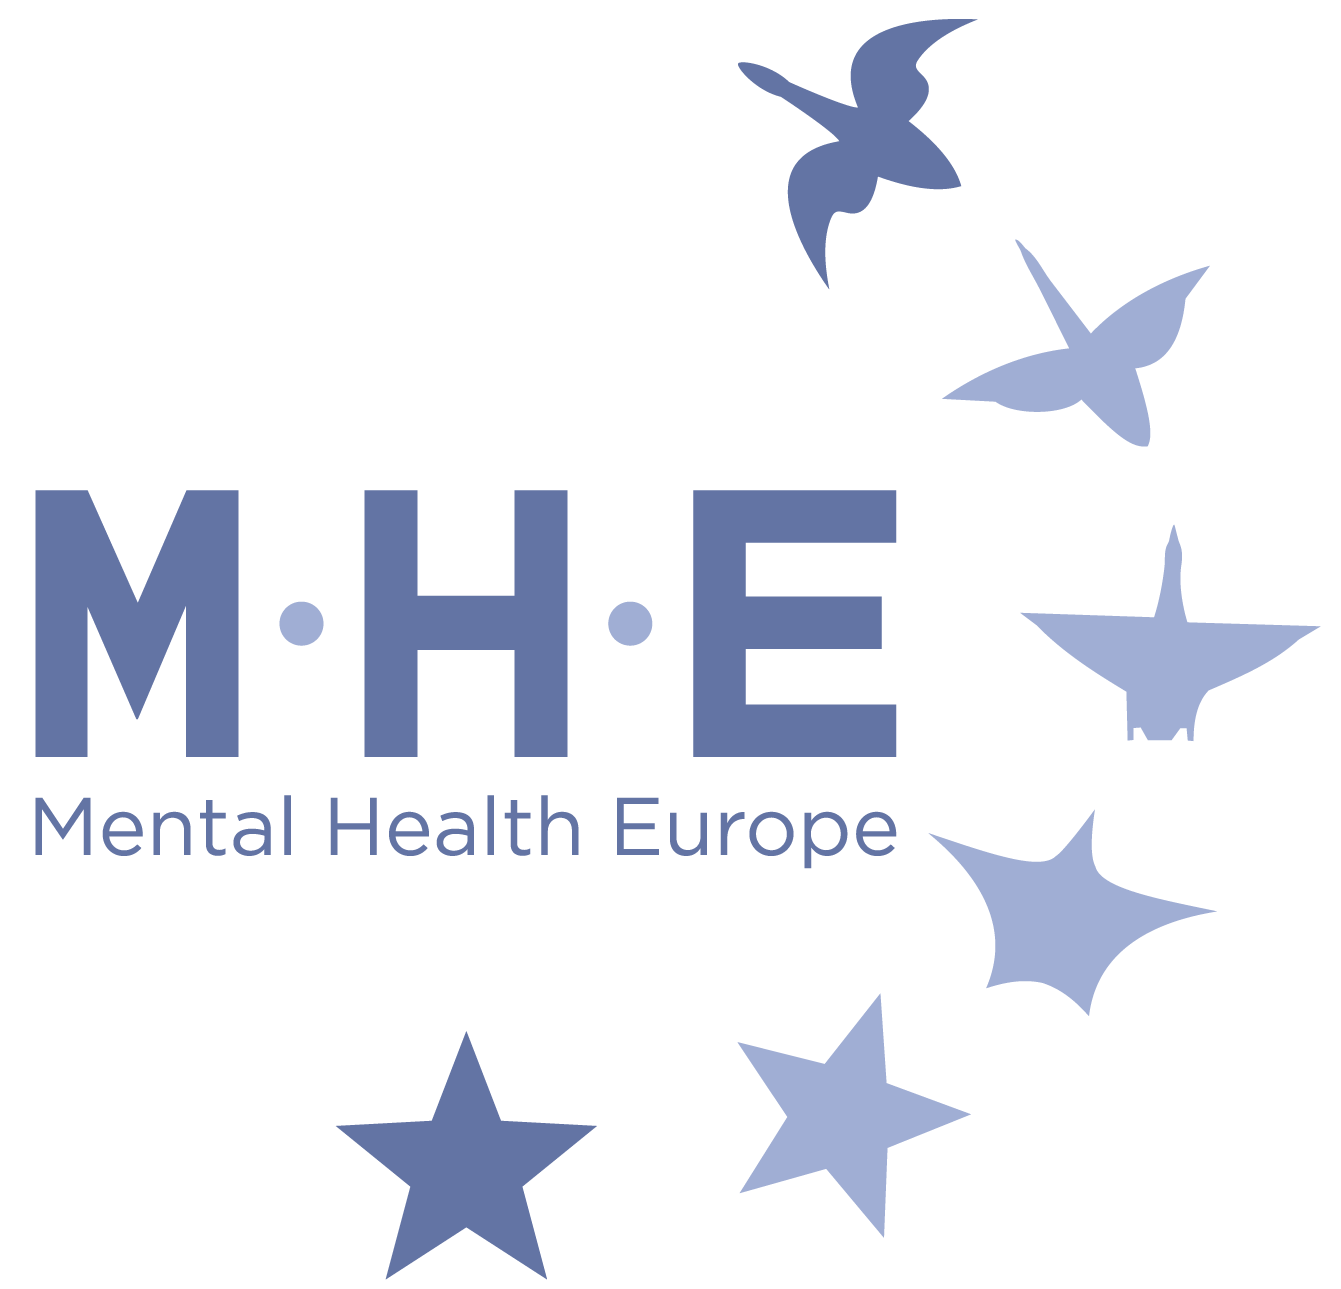 Mental Health Europe